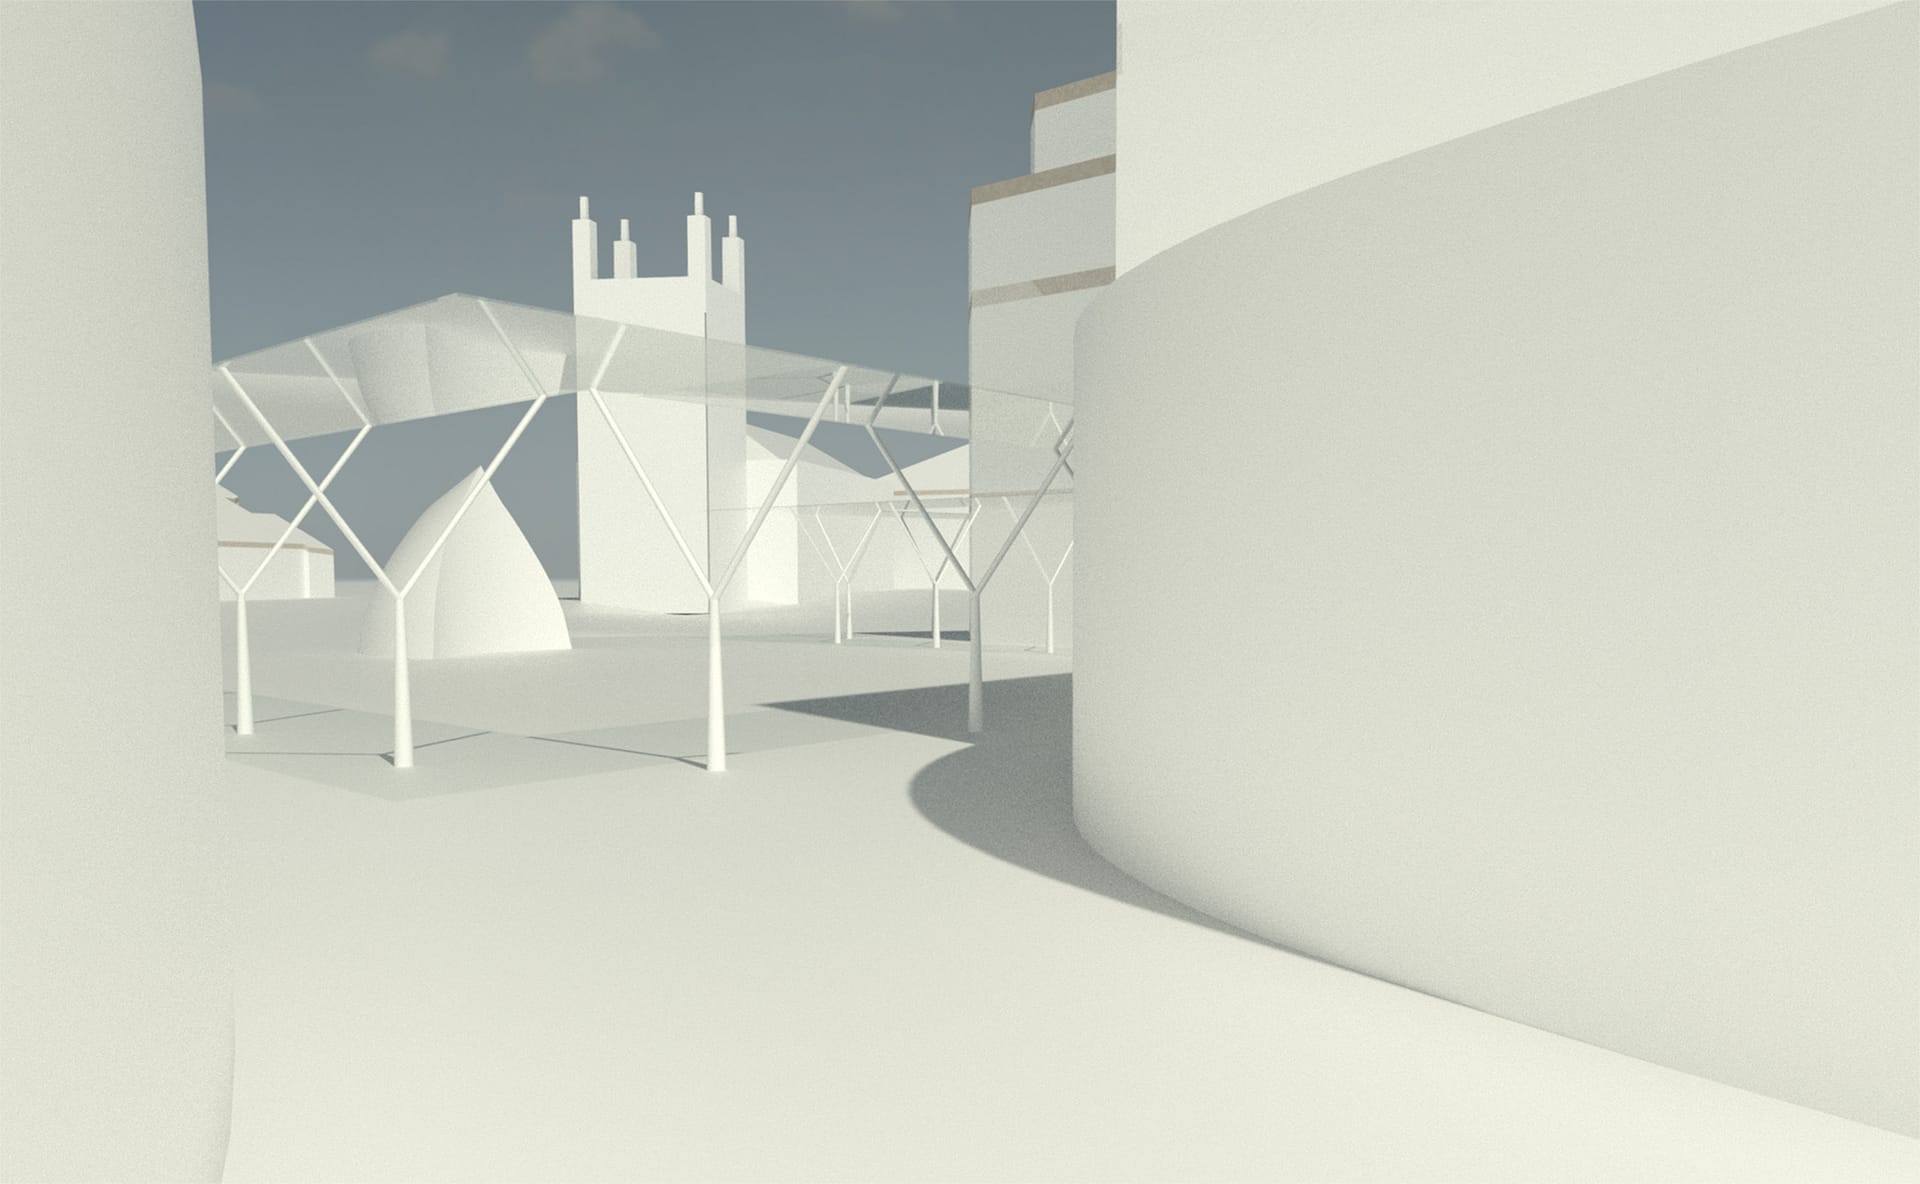 Proposed Mixed-Use Development, Wrexham CGI